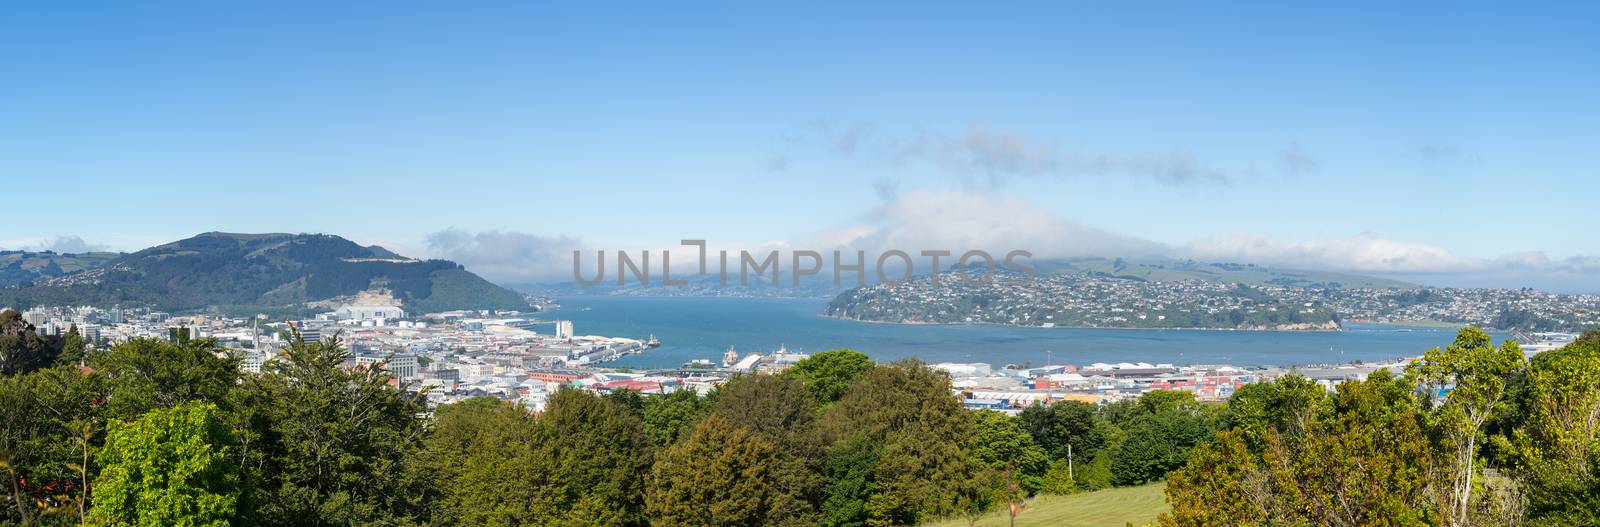 Panoramic landscape Otago Bay Dunedin by steheap